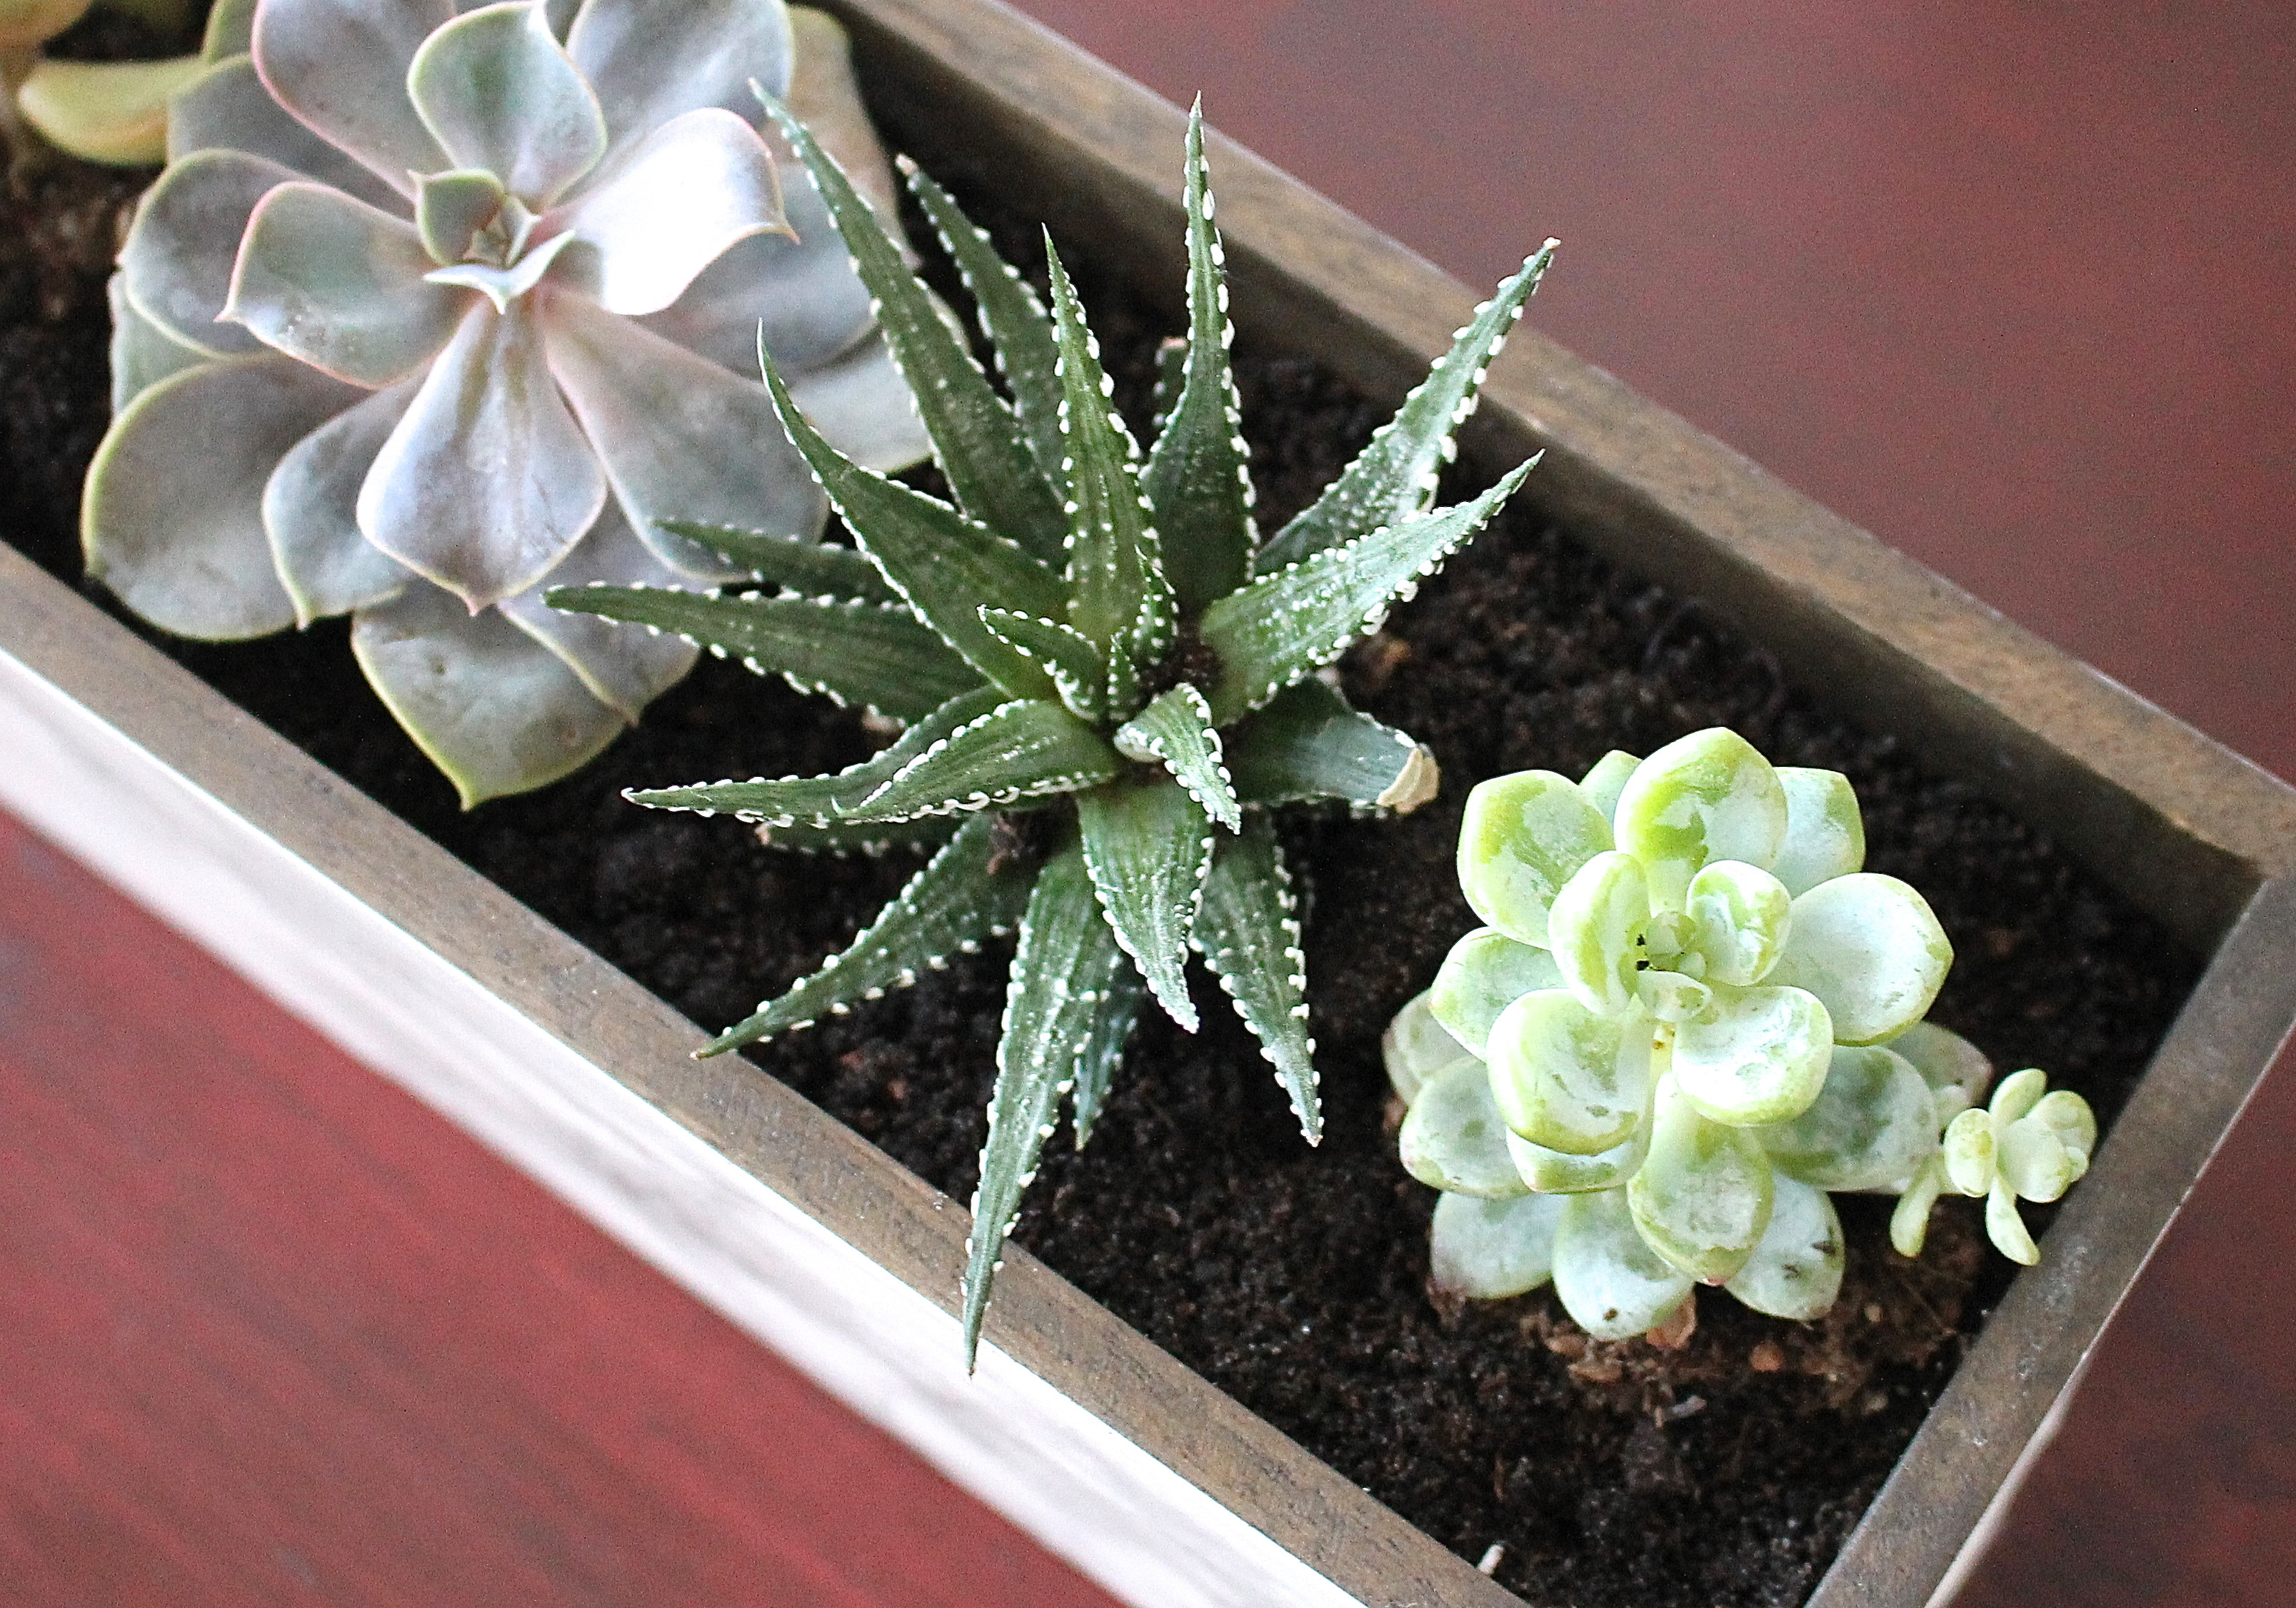 Best ideas about DIY Succulent Planter
. Save or Pin Marble Succulent Planter DIY Now.